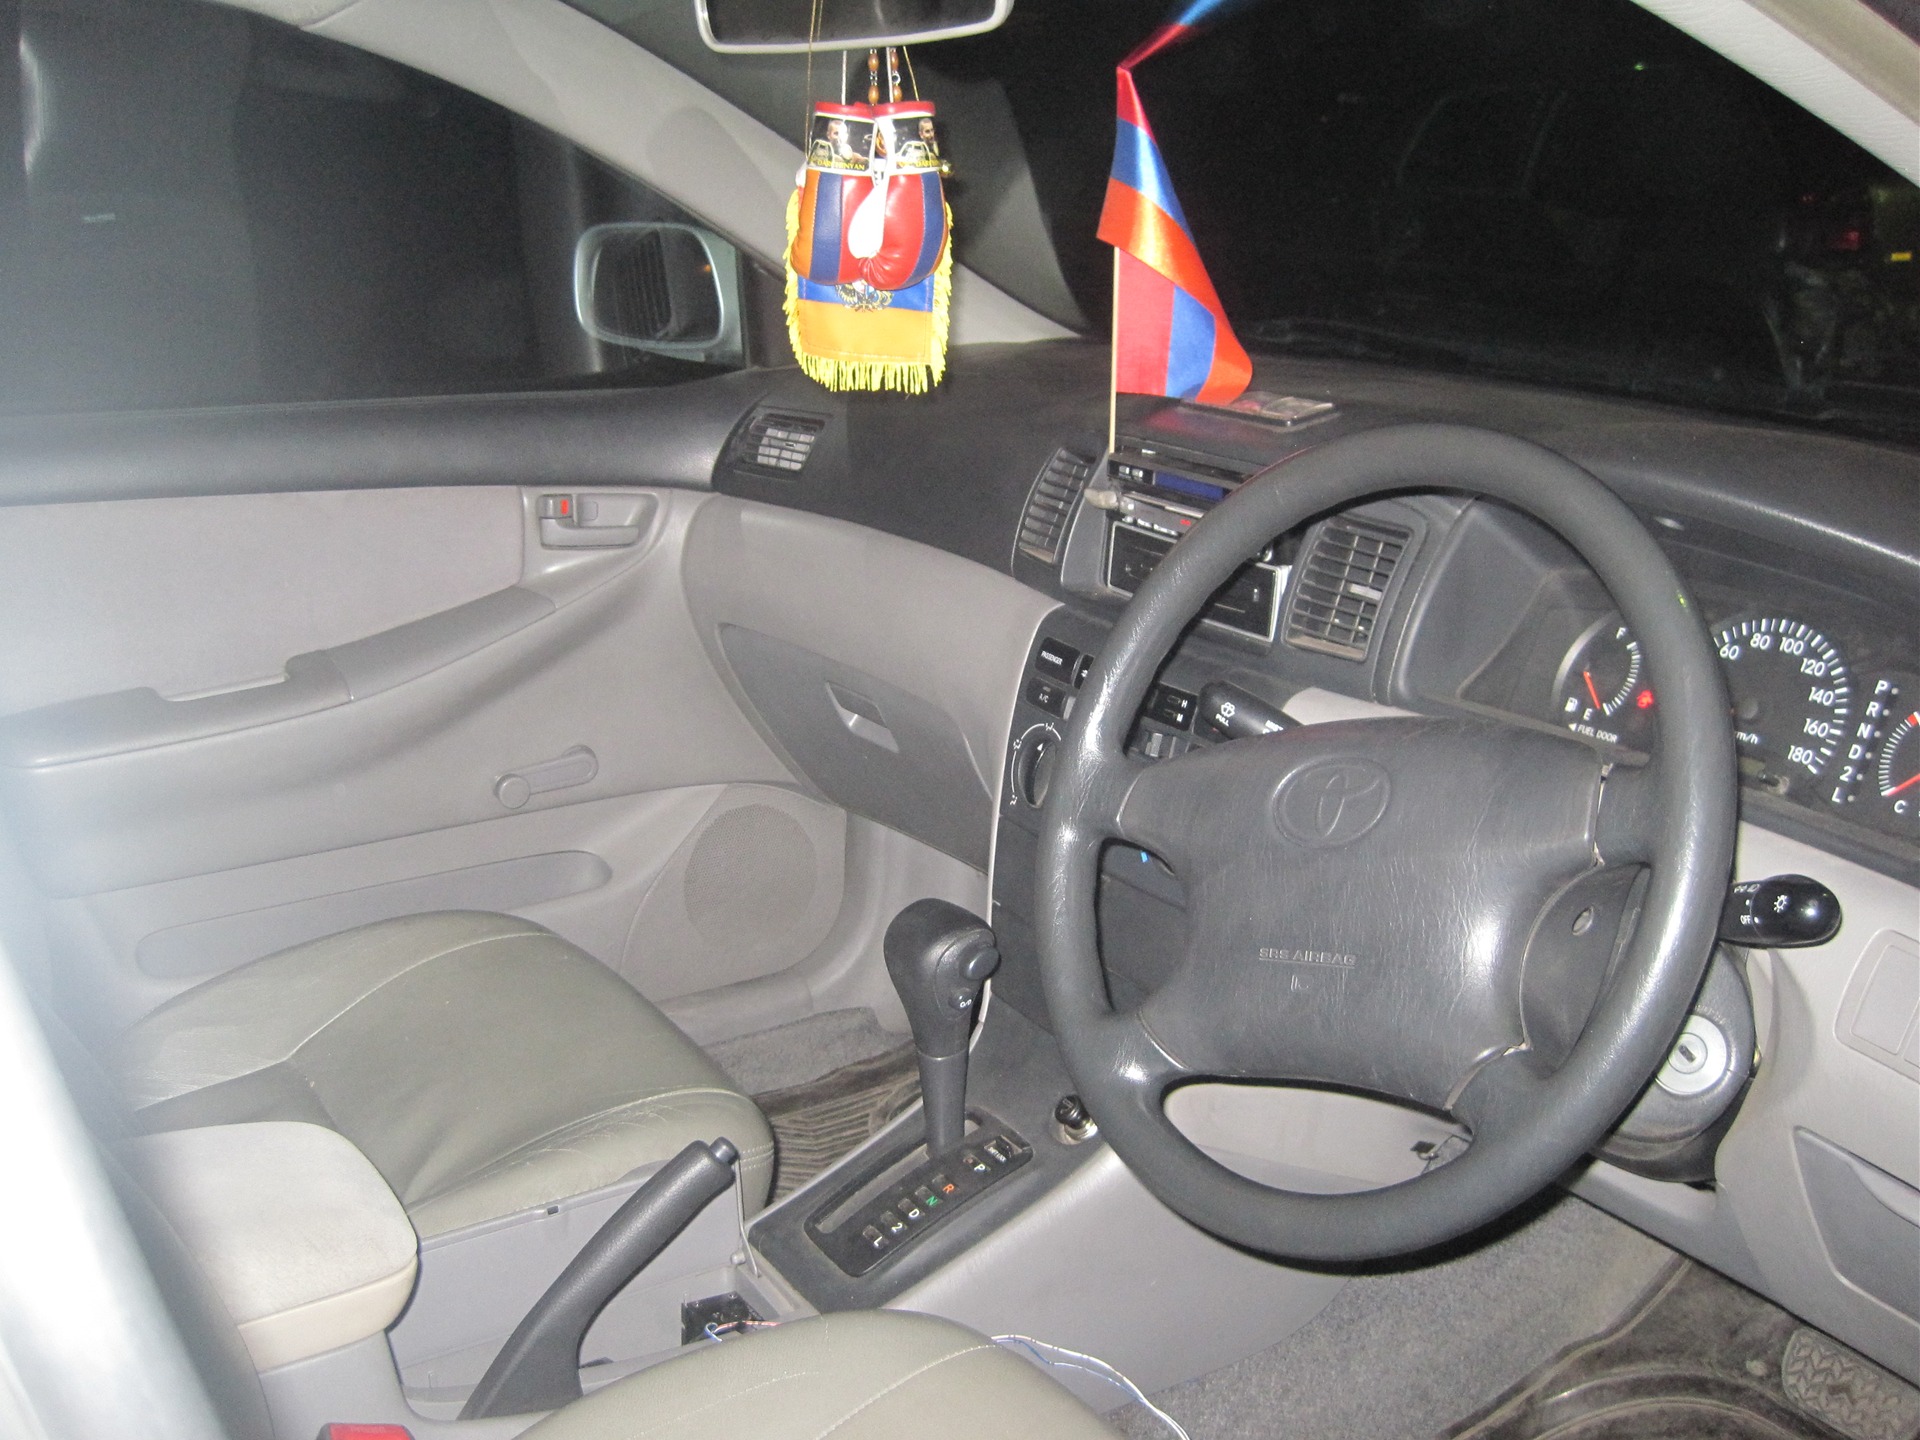 1 2010 Toyota Corolla 2001